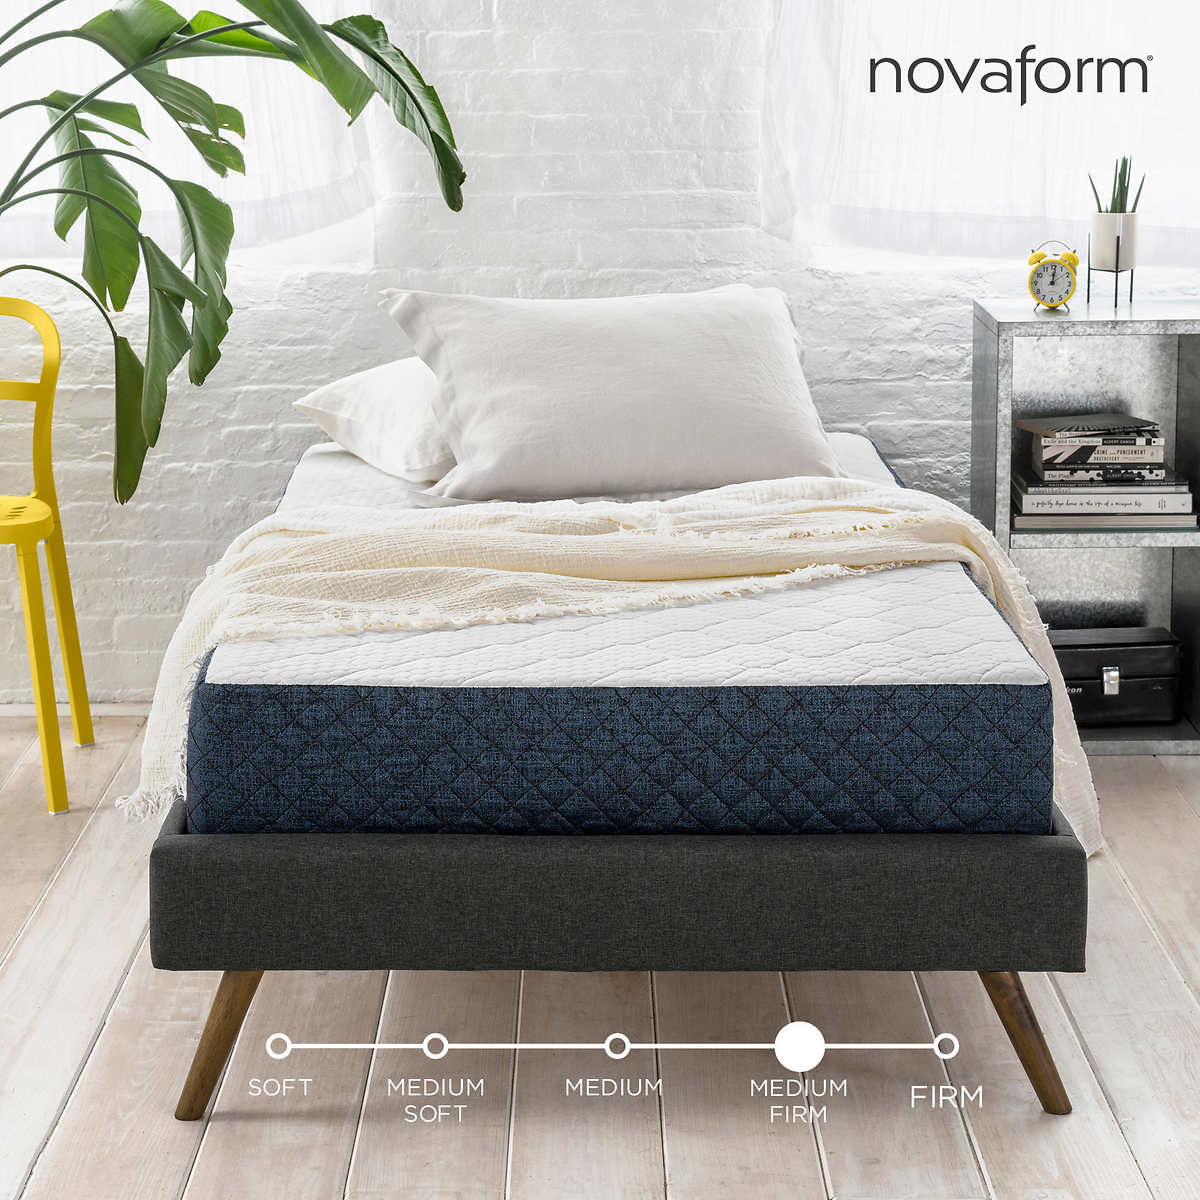 Novaform 8 Gel Memory Foam Mattress, Costco Bed In A Box Twin Xl Size